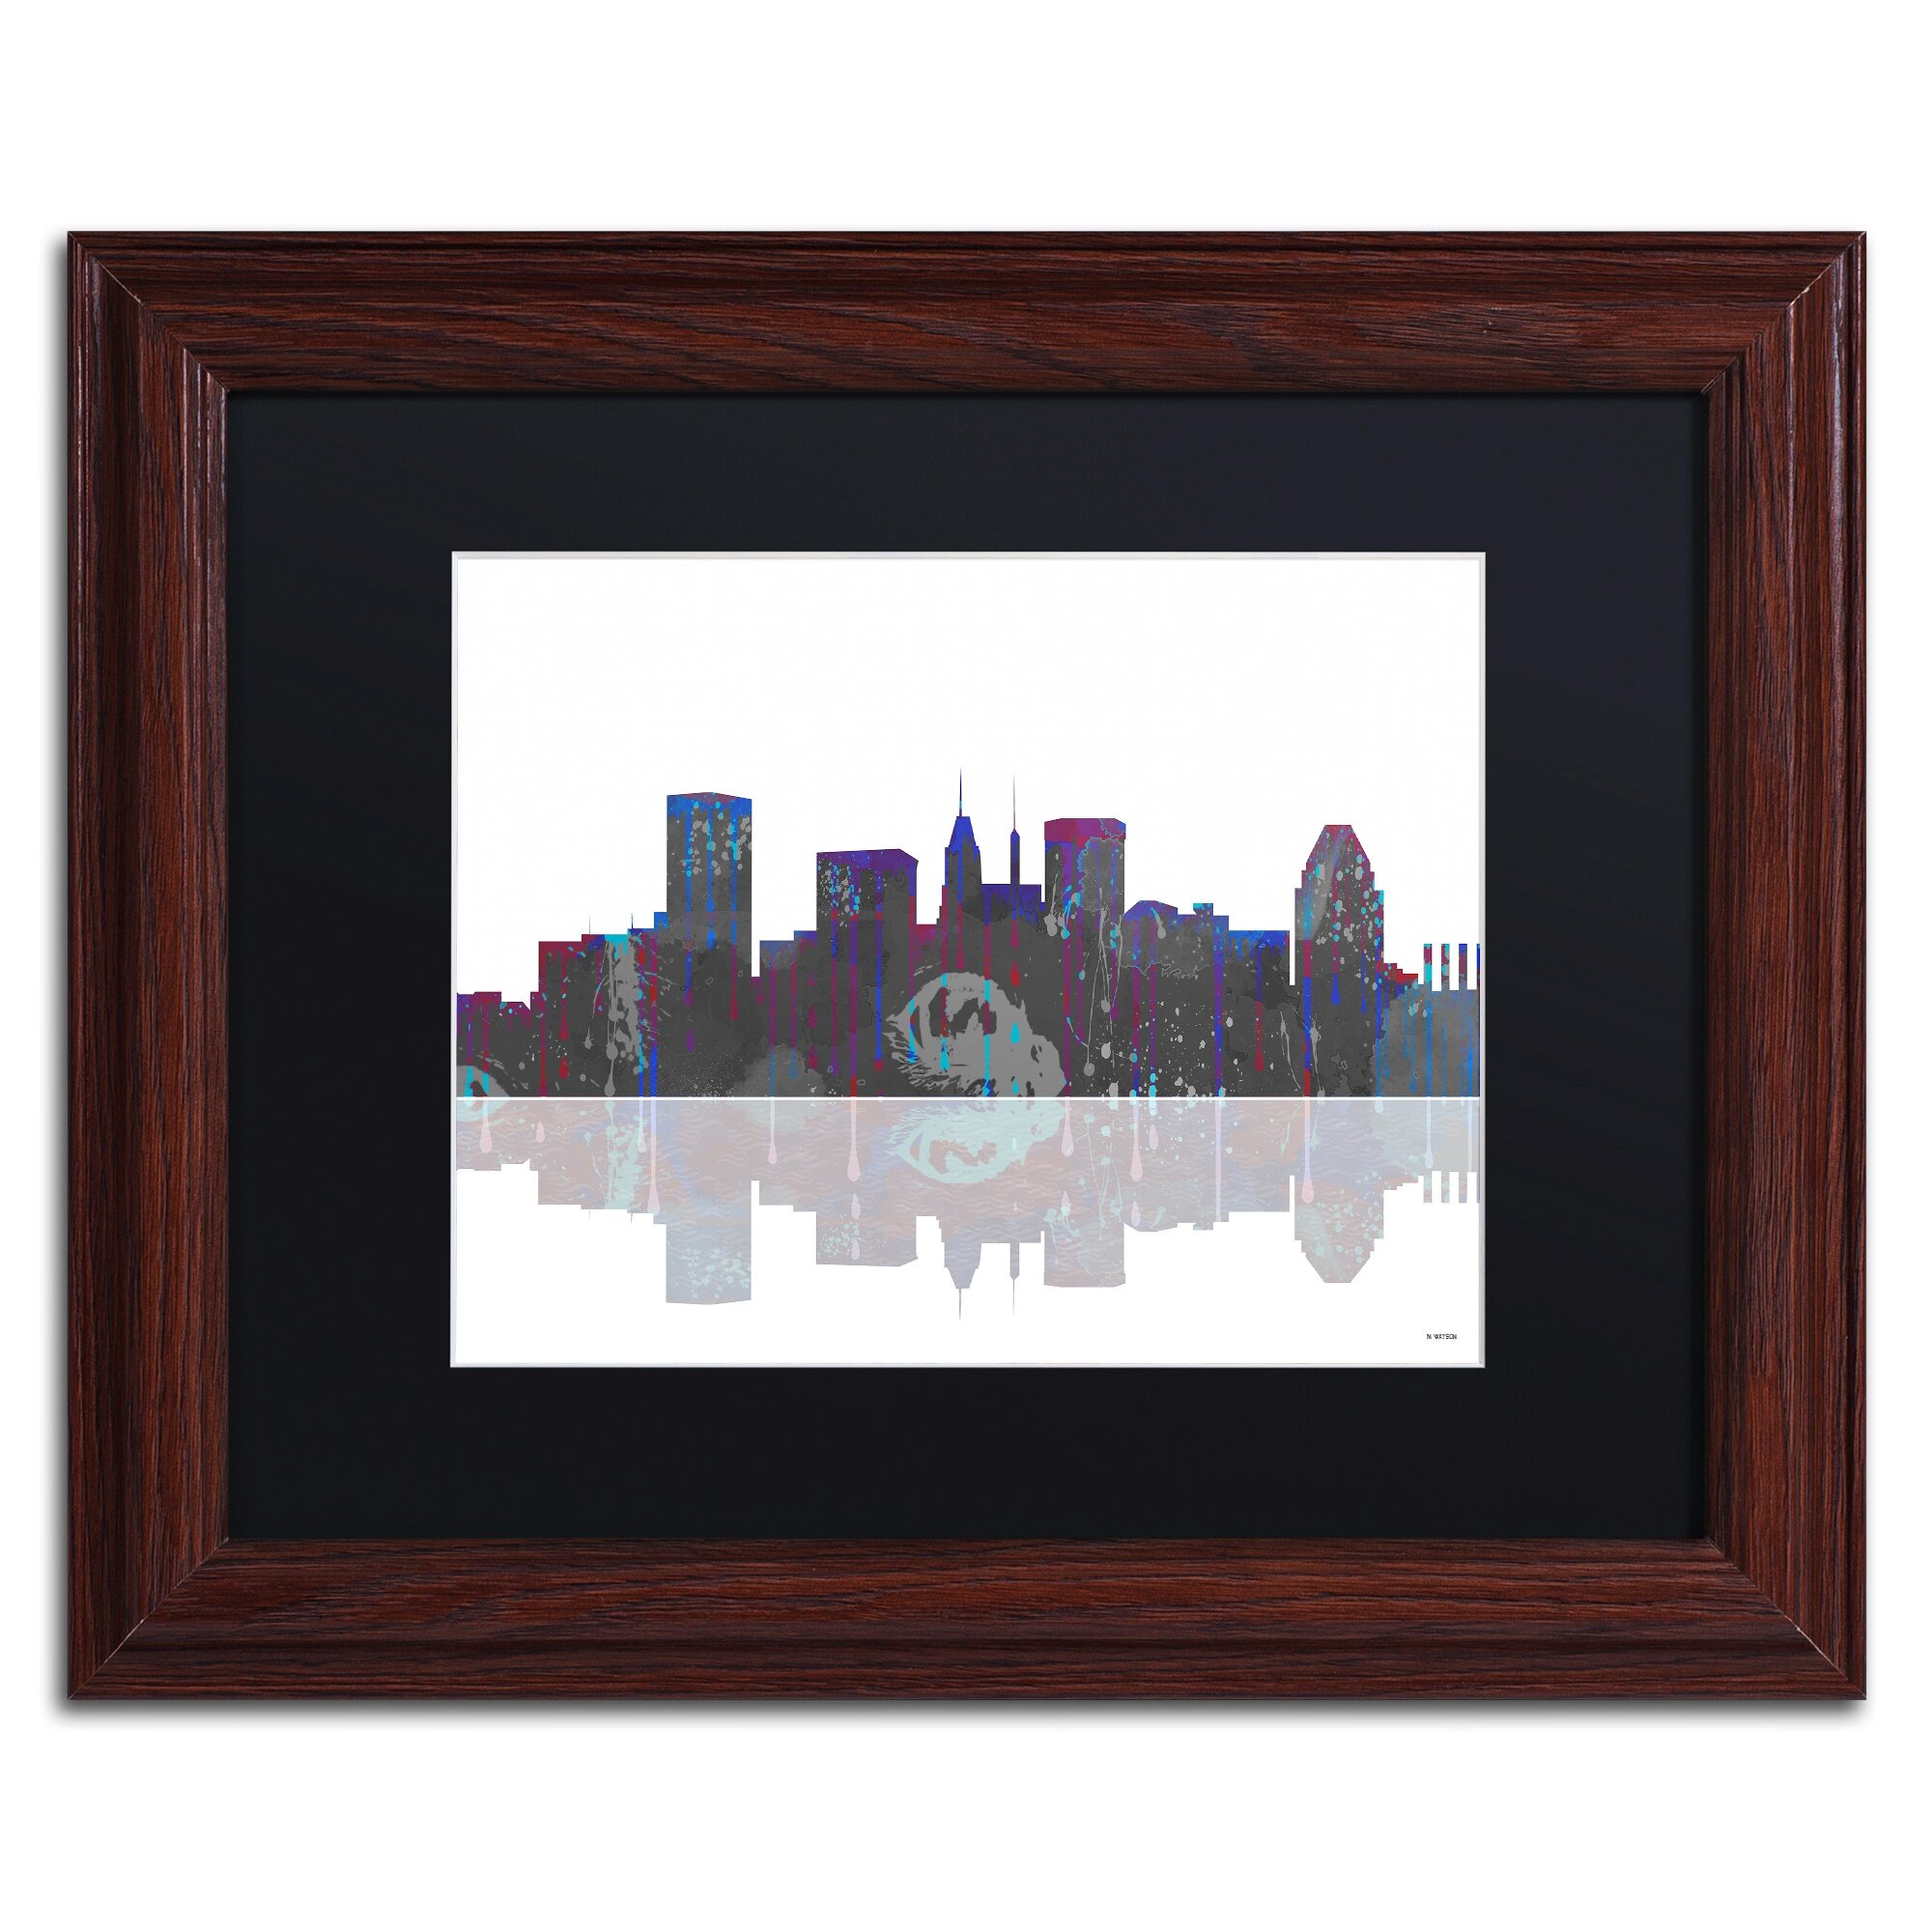 Trademark Art Baltimore Maryland Skyline Framed Graphic Art Print On Canvas Wayfair